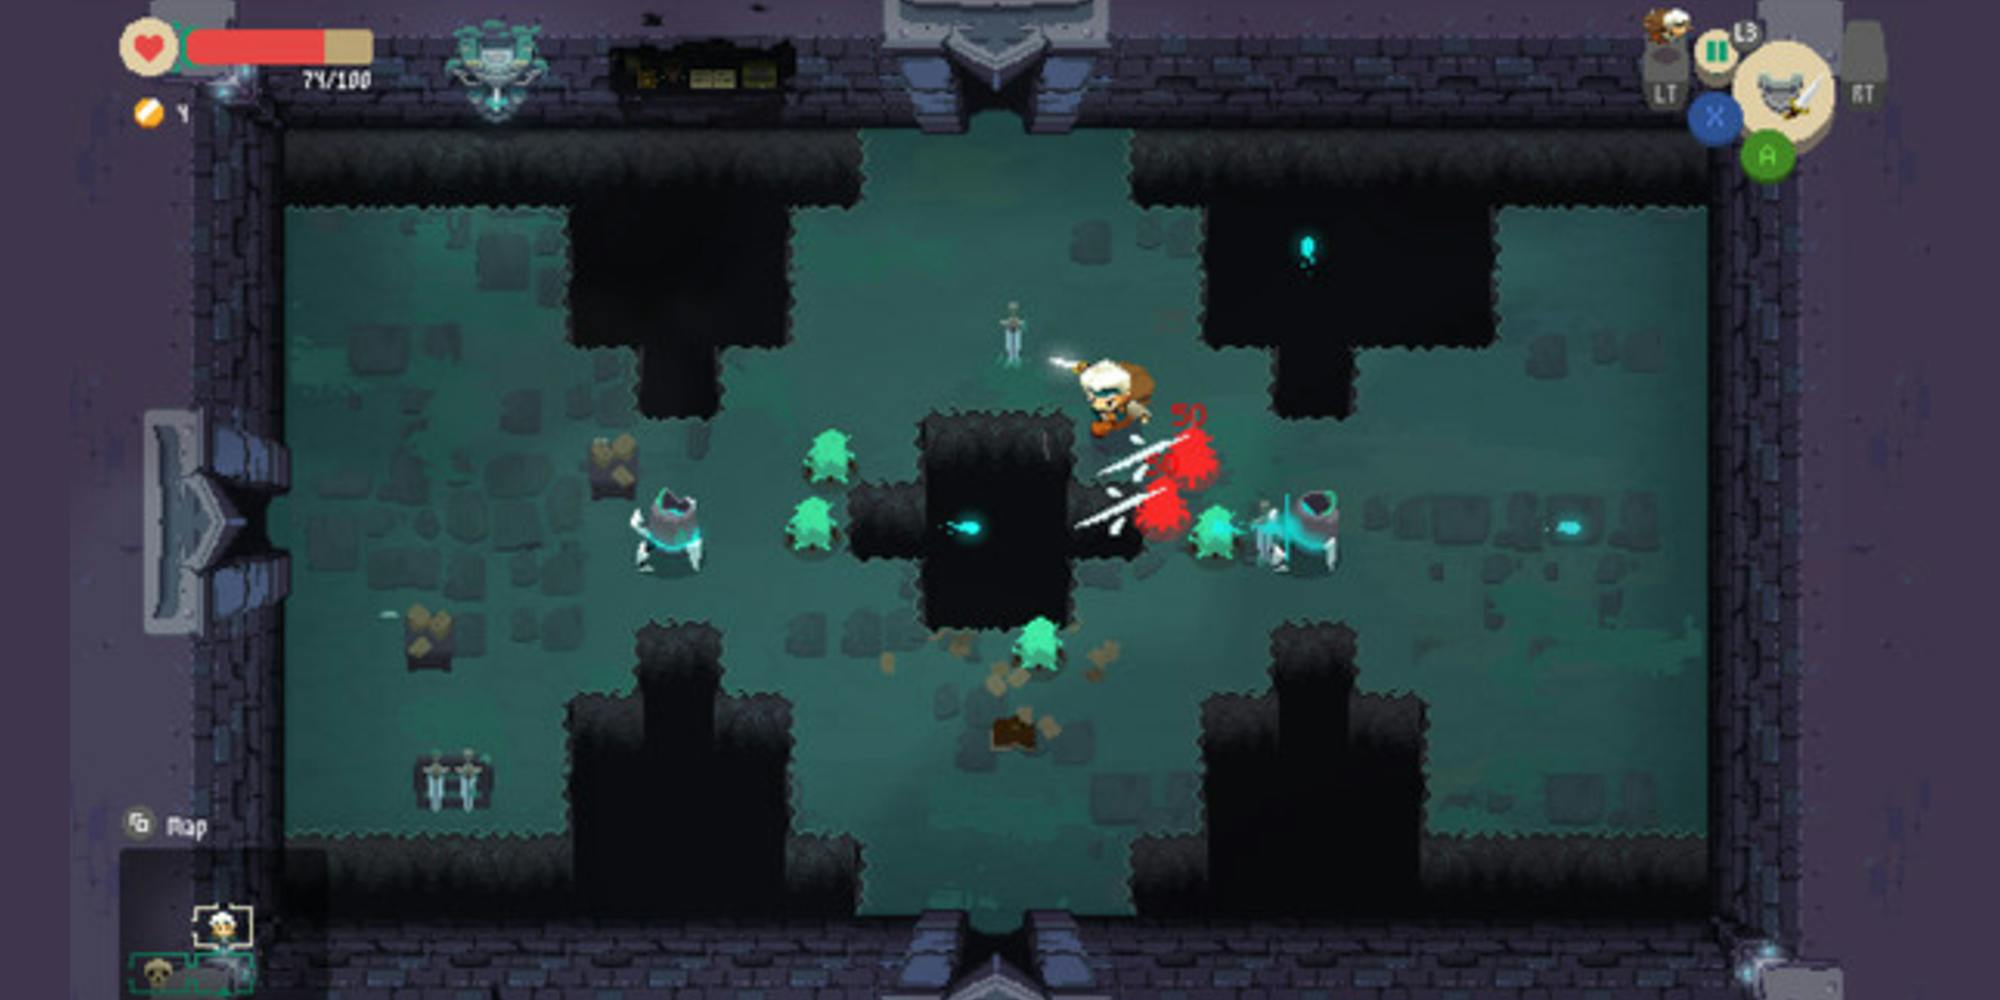 Moonlighter dungeon crawling segment showing its Legend of Zelda-inspired gameplay